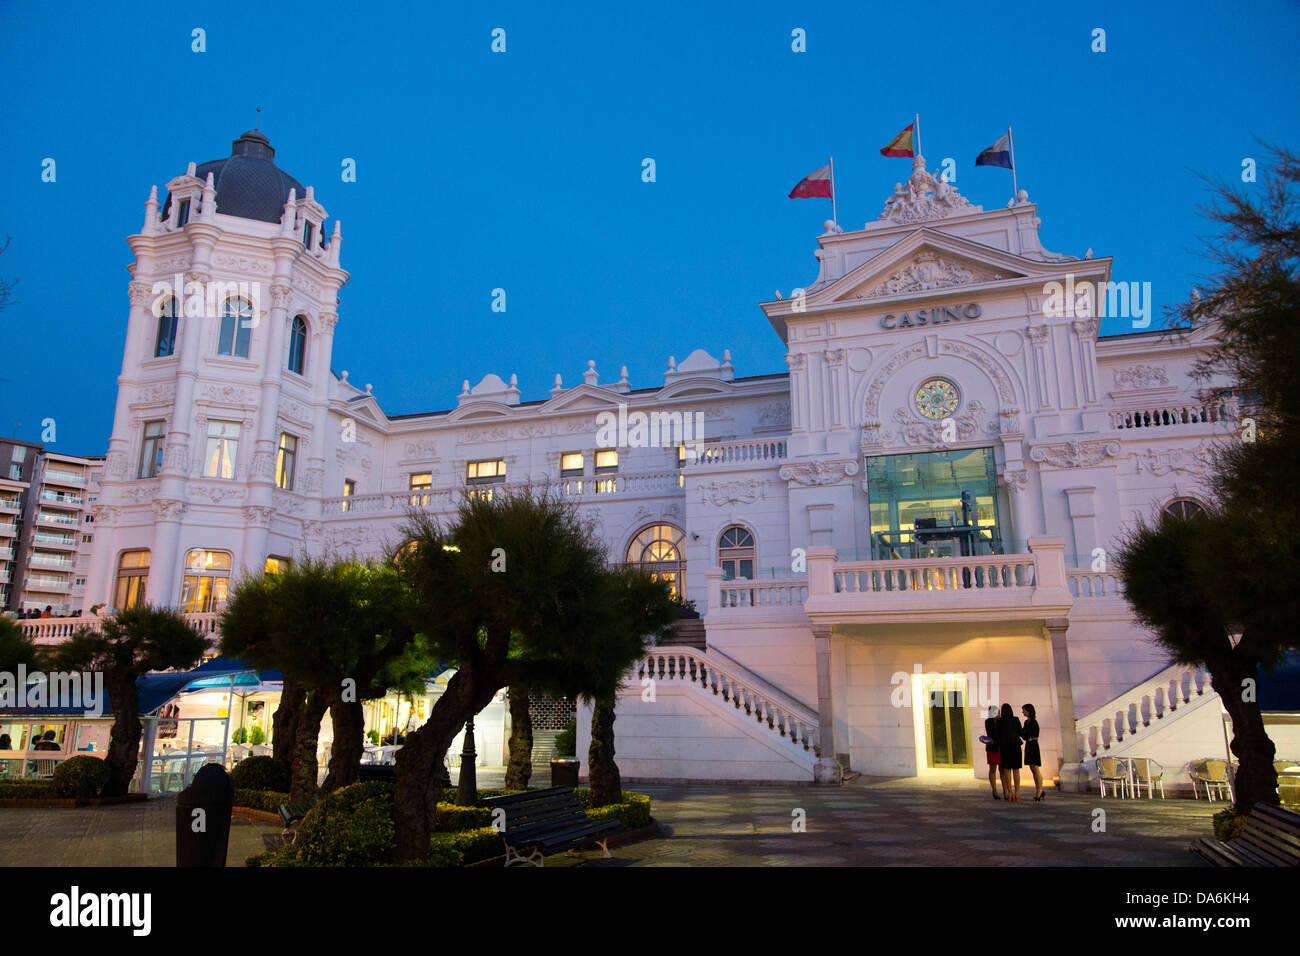 Gran Casino Santander Cantabria Spain Stock Photo